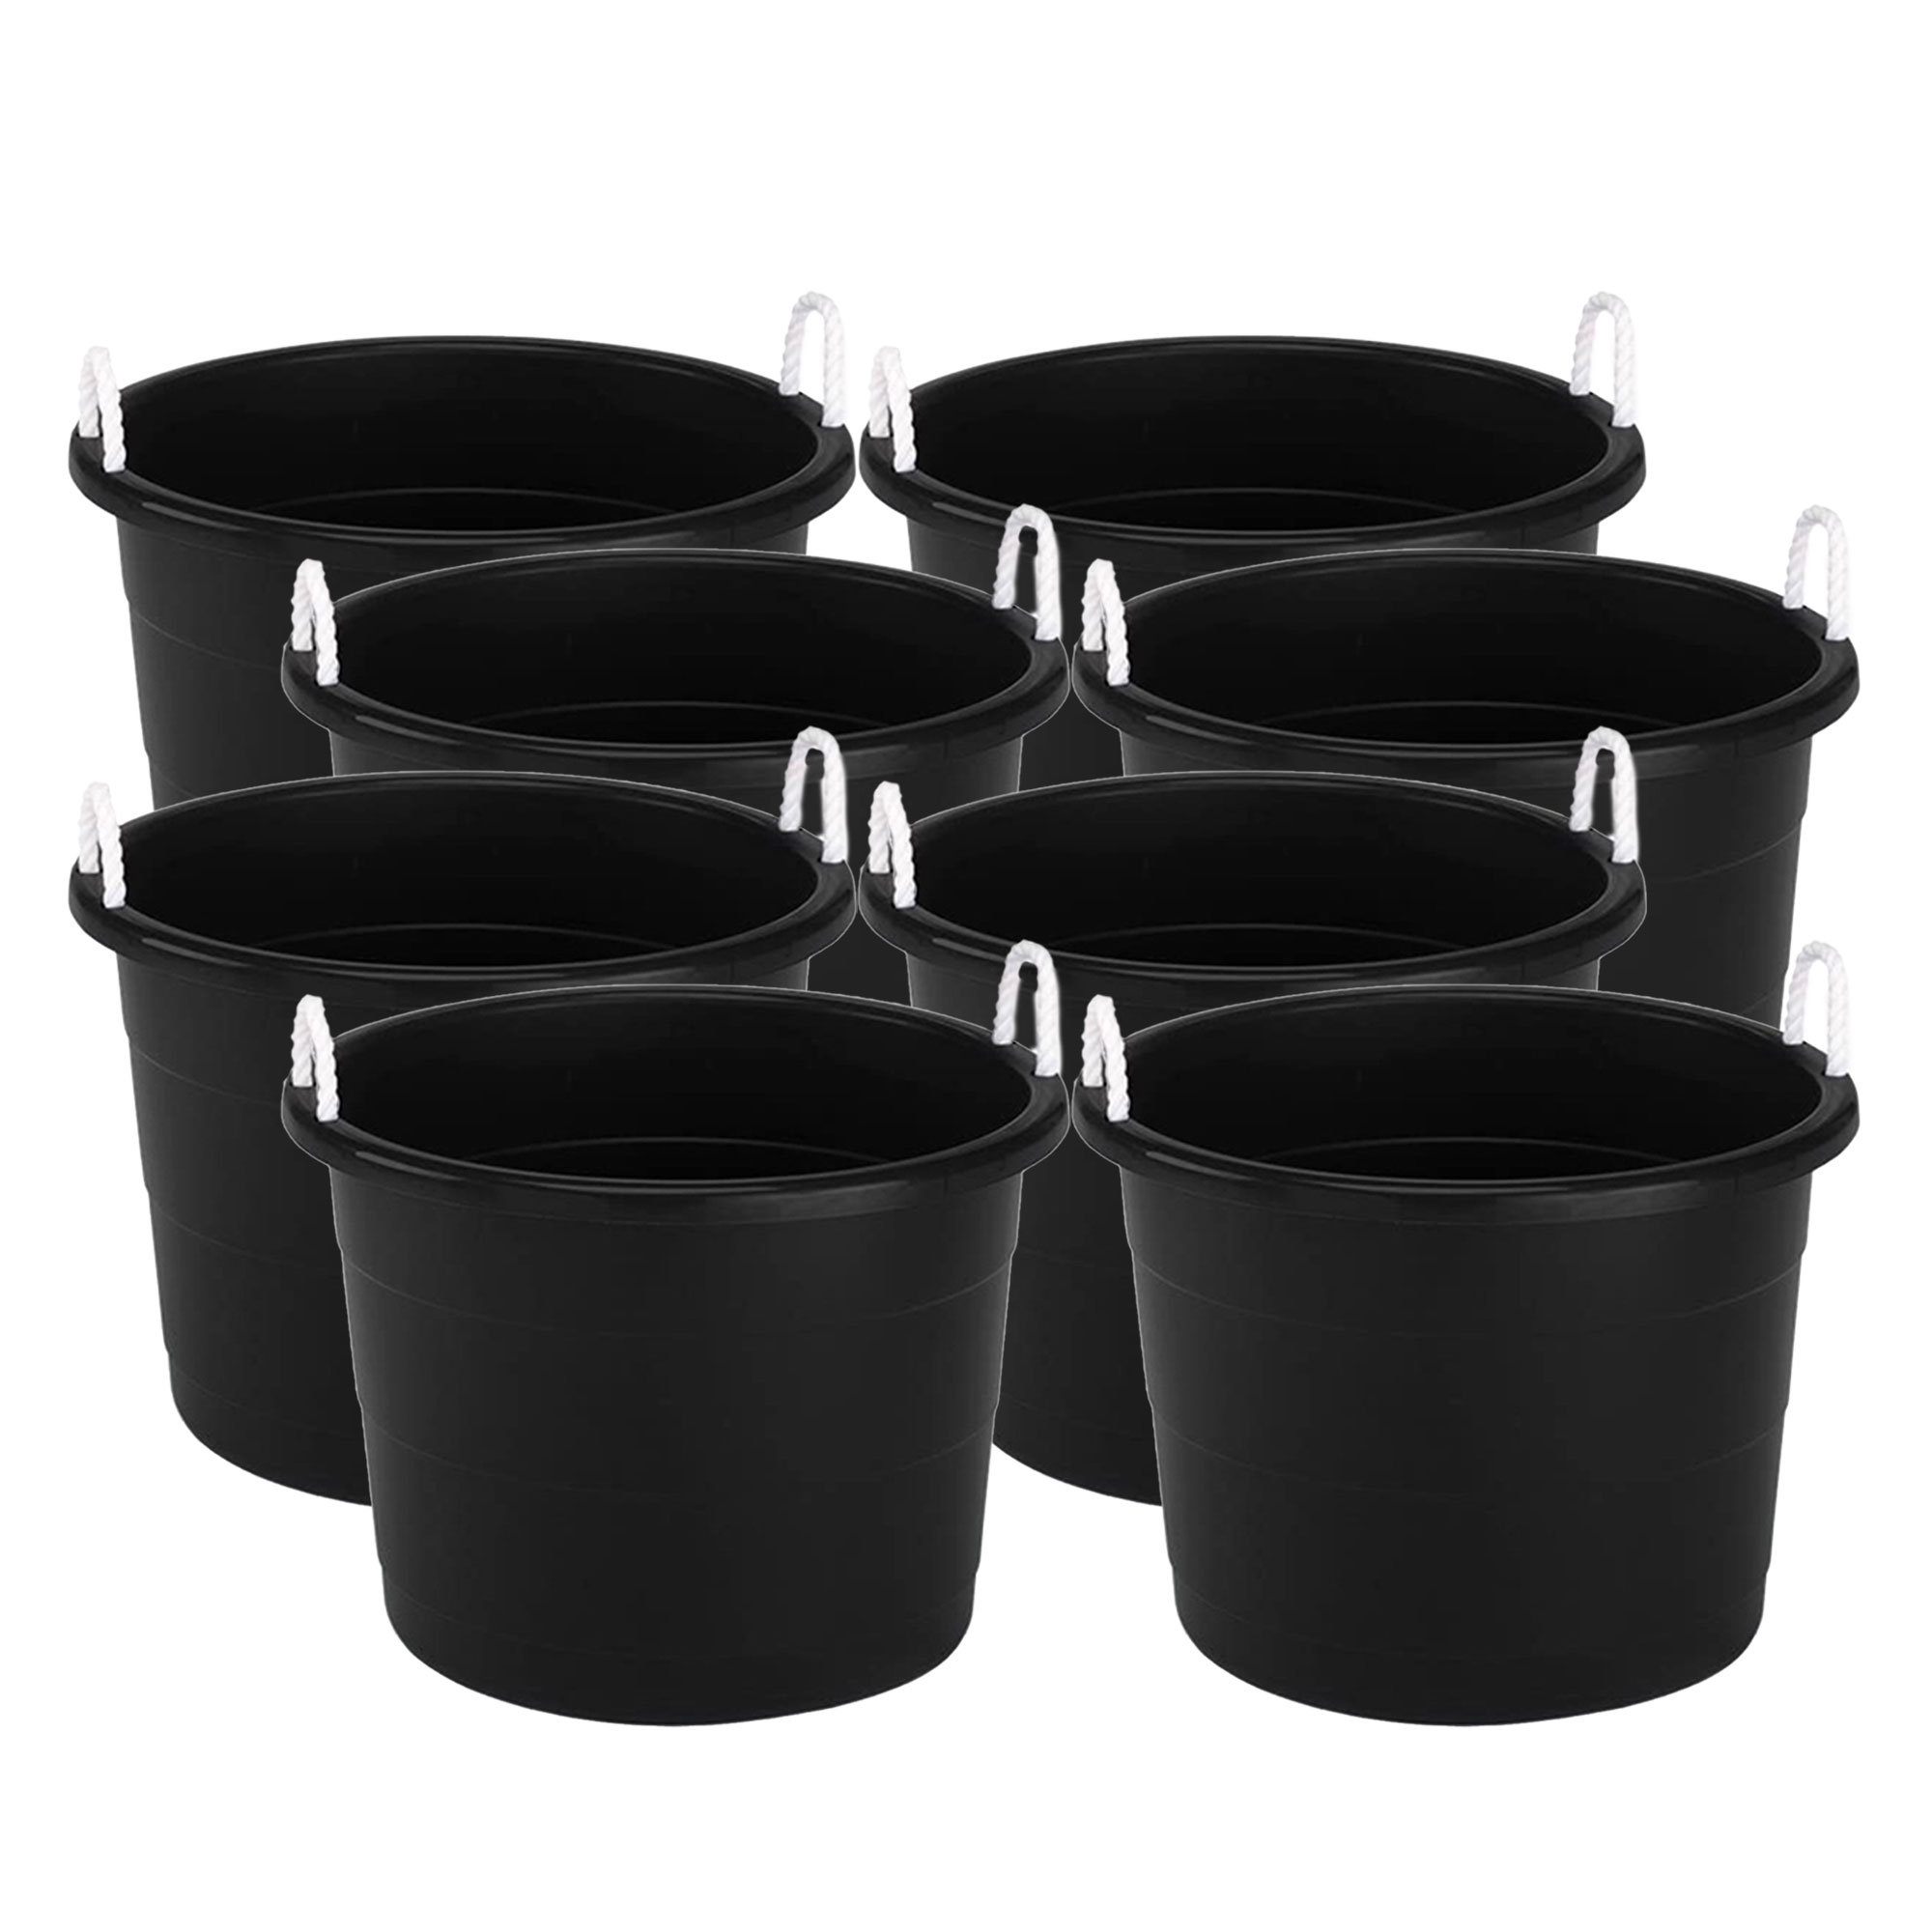 5 Gallon Buckets, Seven (7) Pack Plastic All Colors